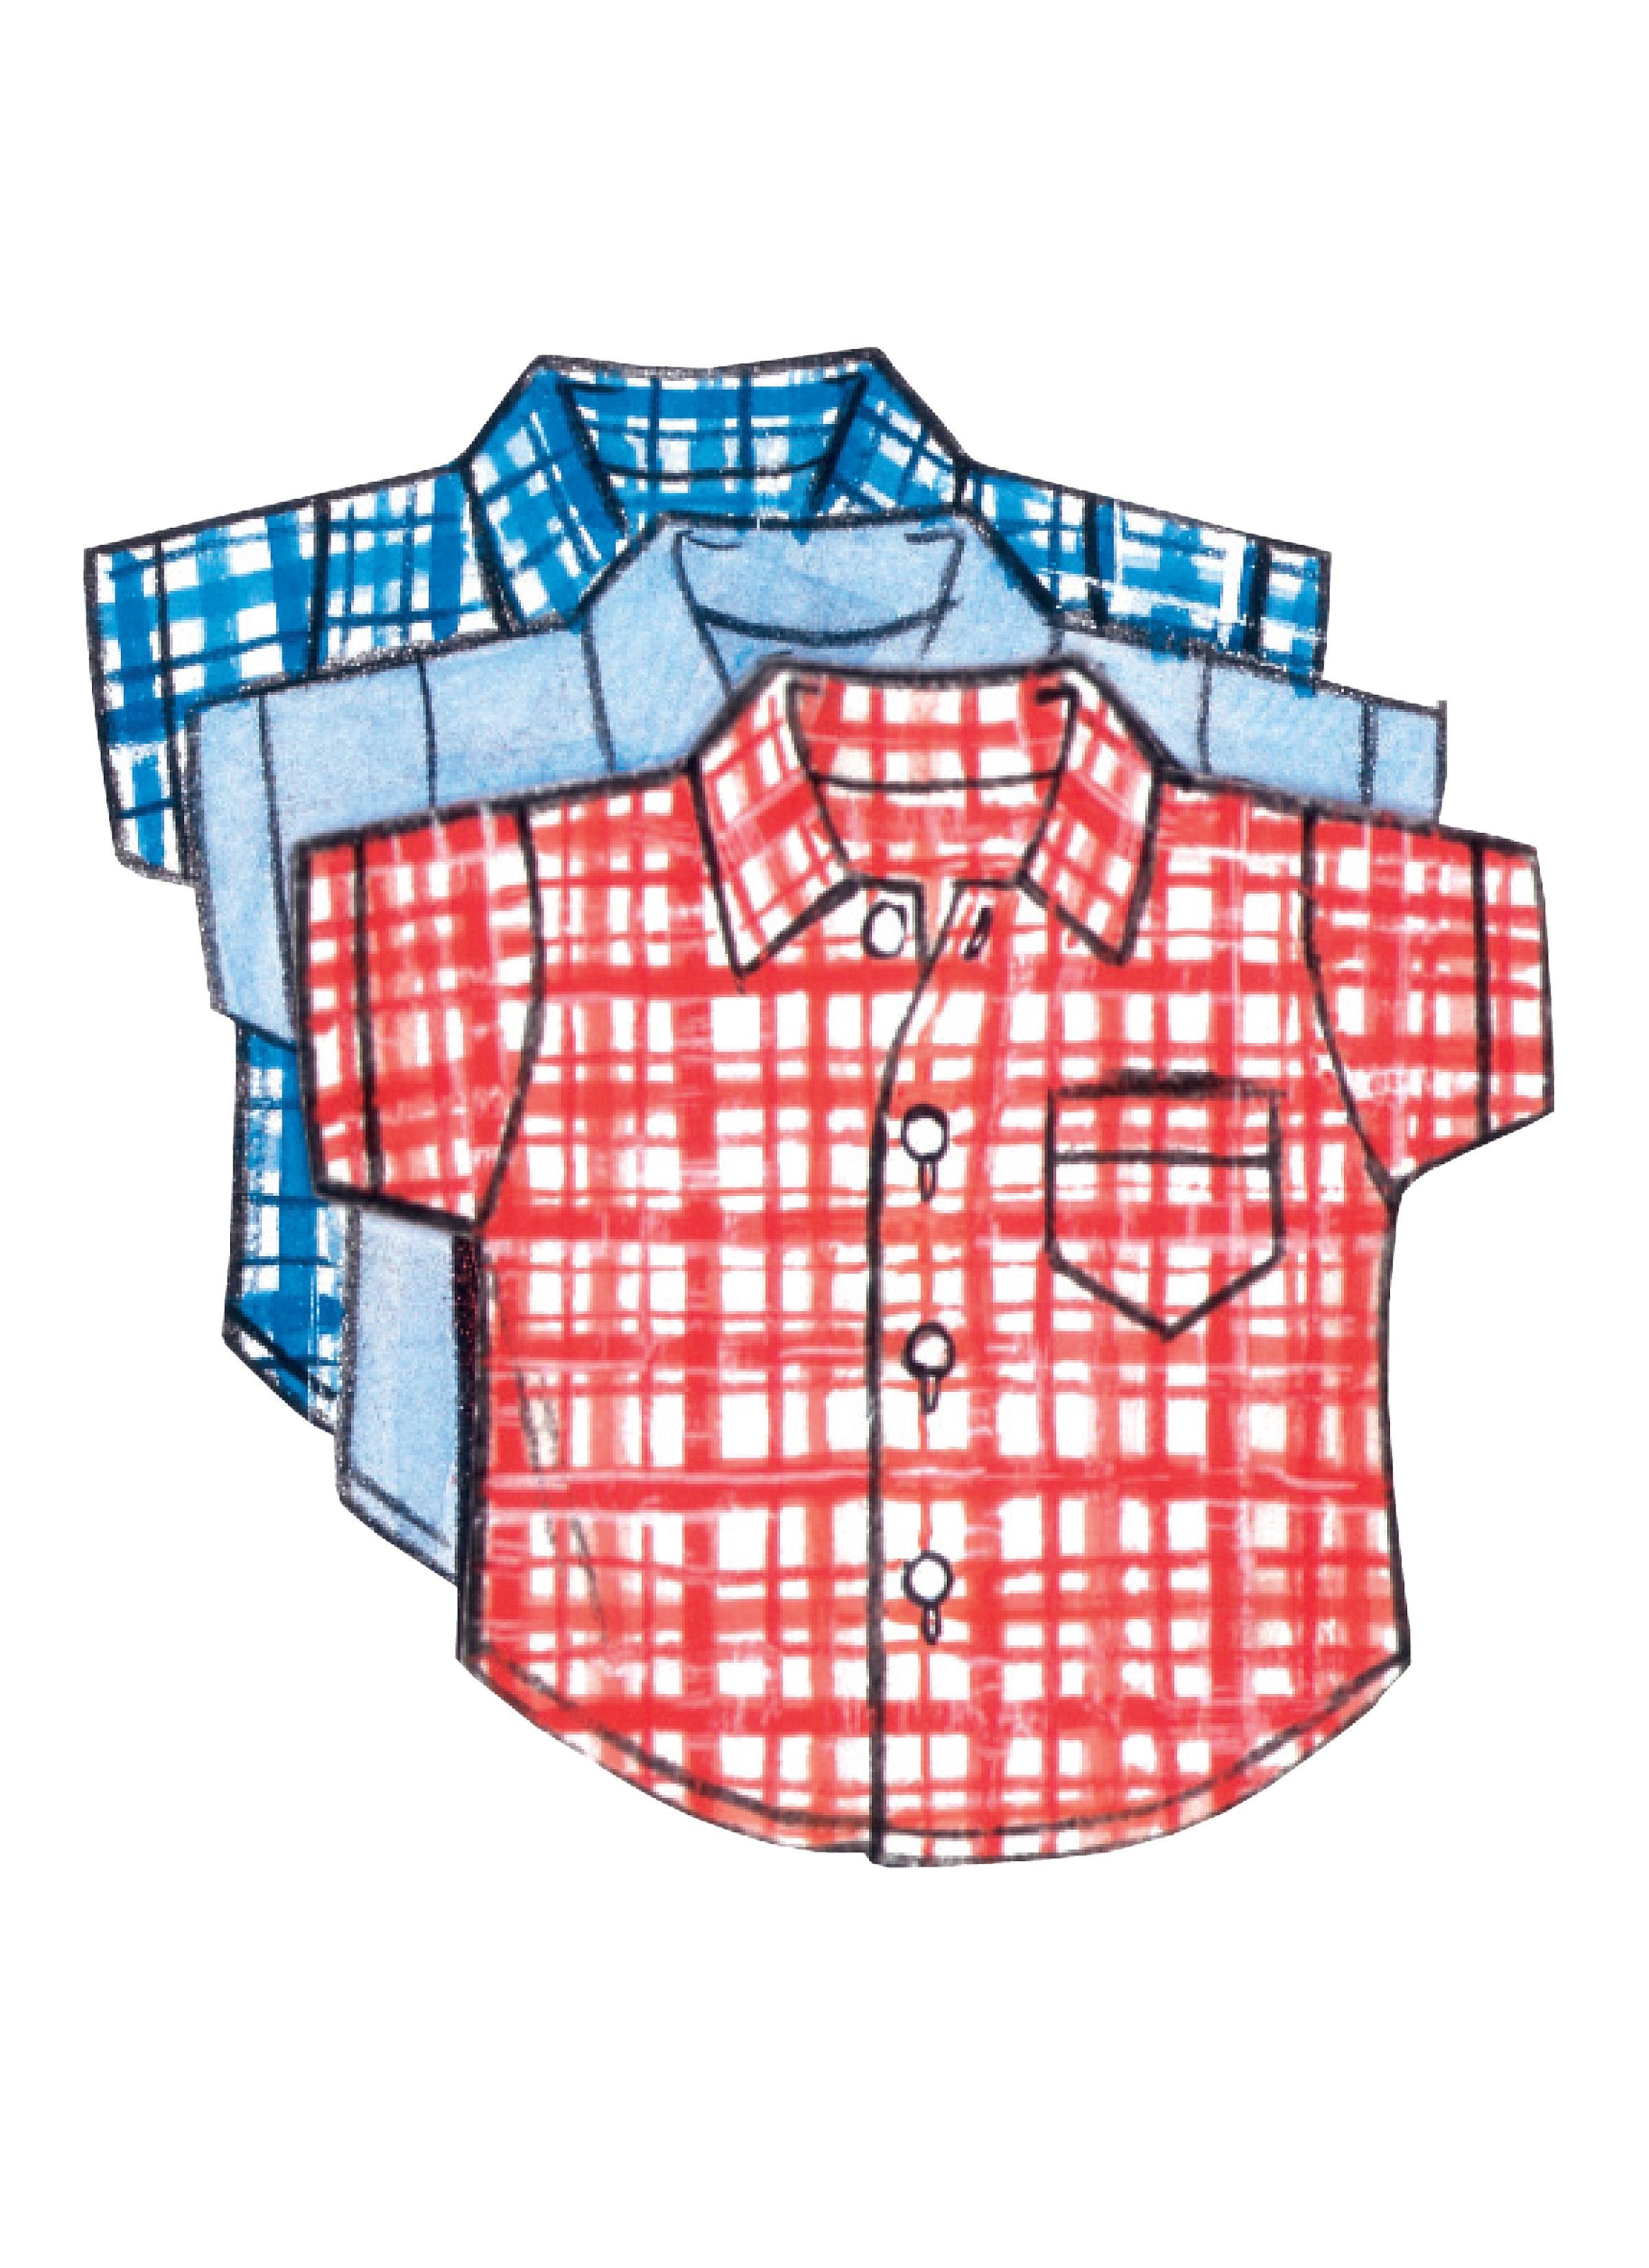 Butterick B5510 Infants' Shirt, T-Shirt, Pants and Hat